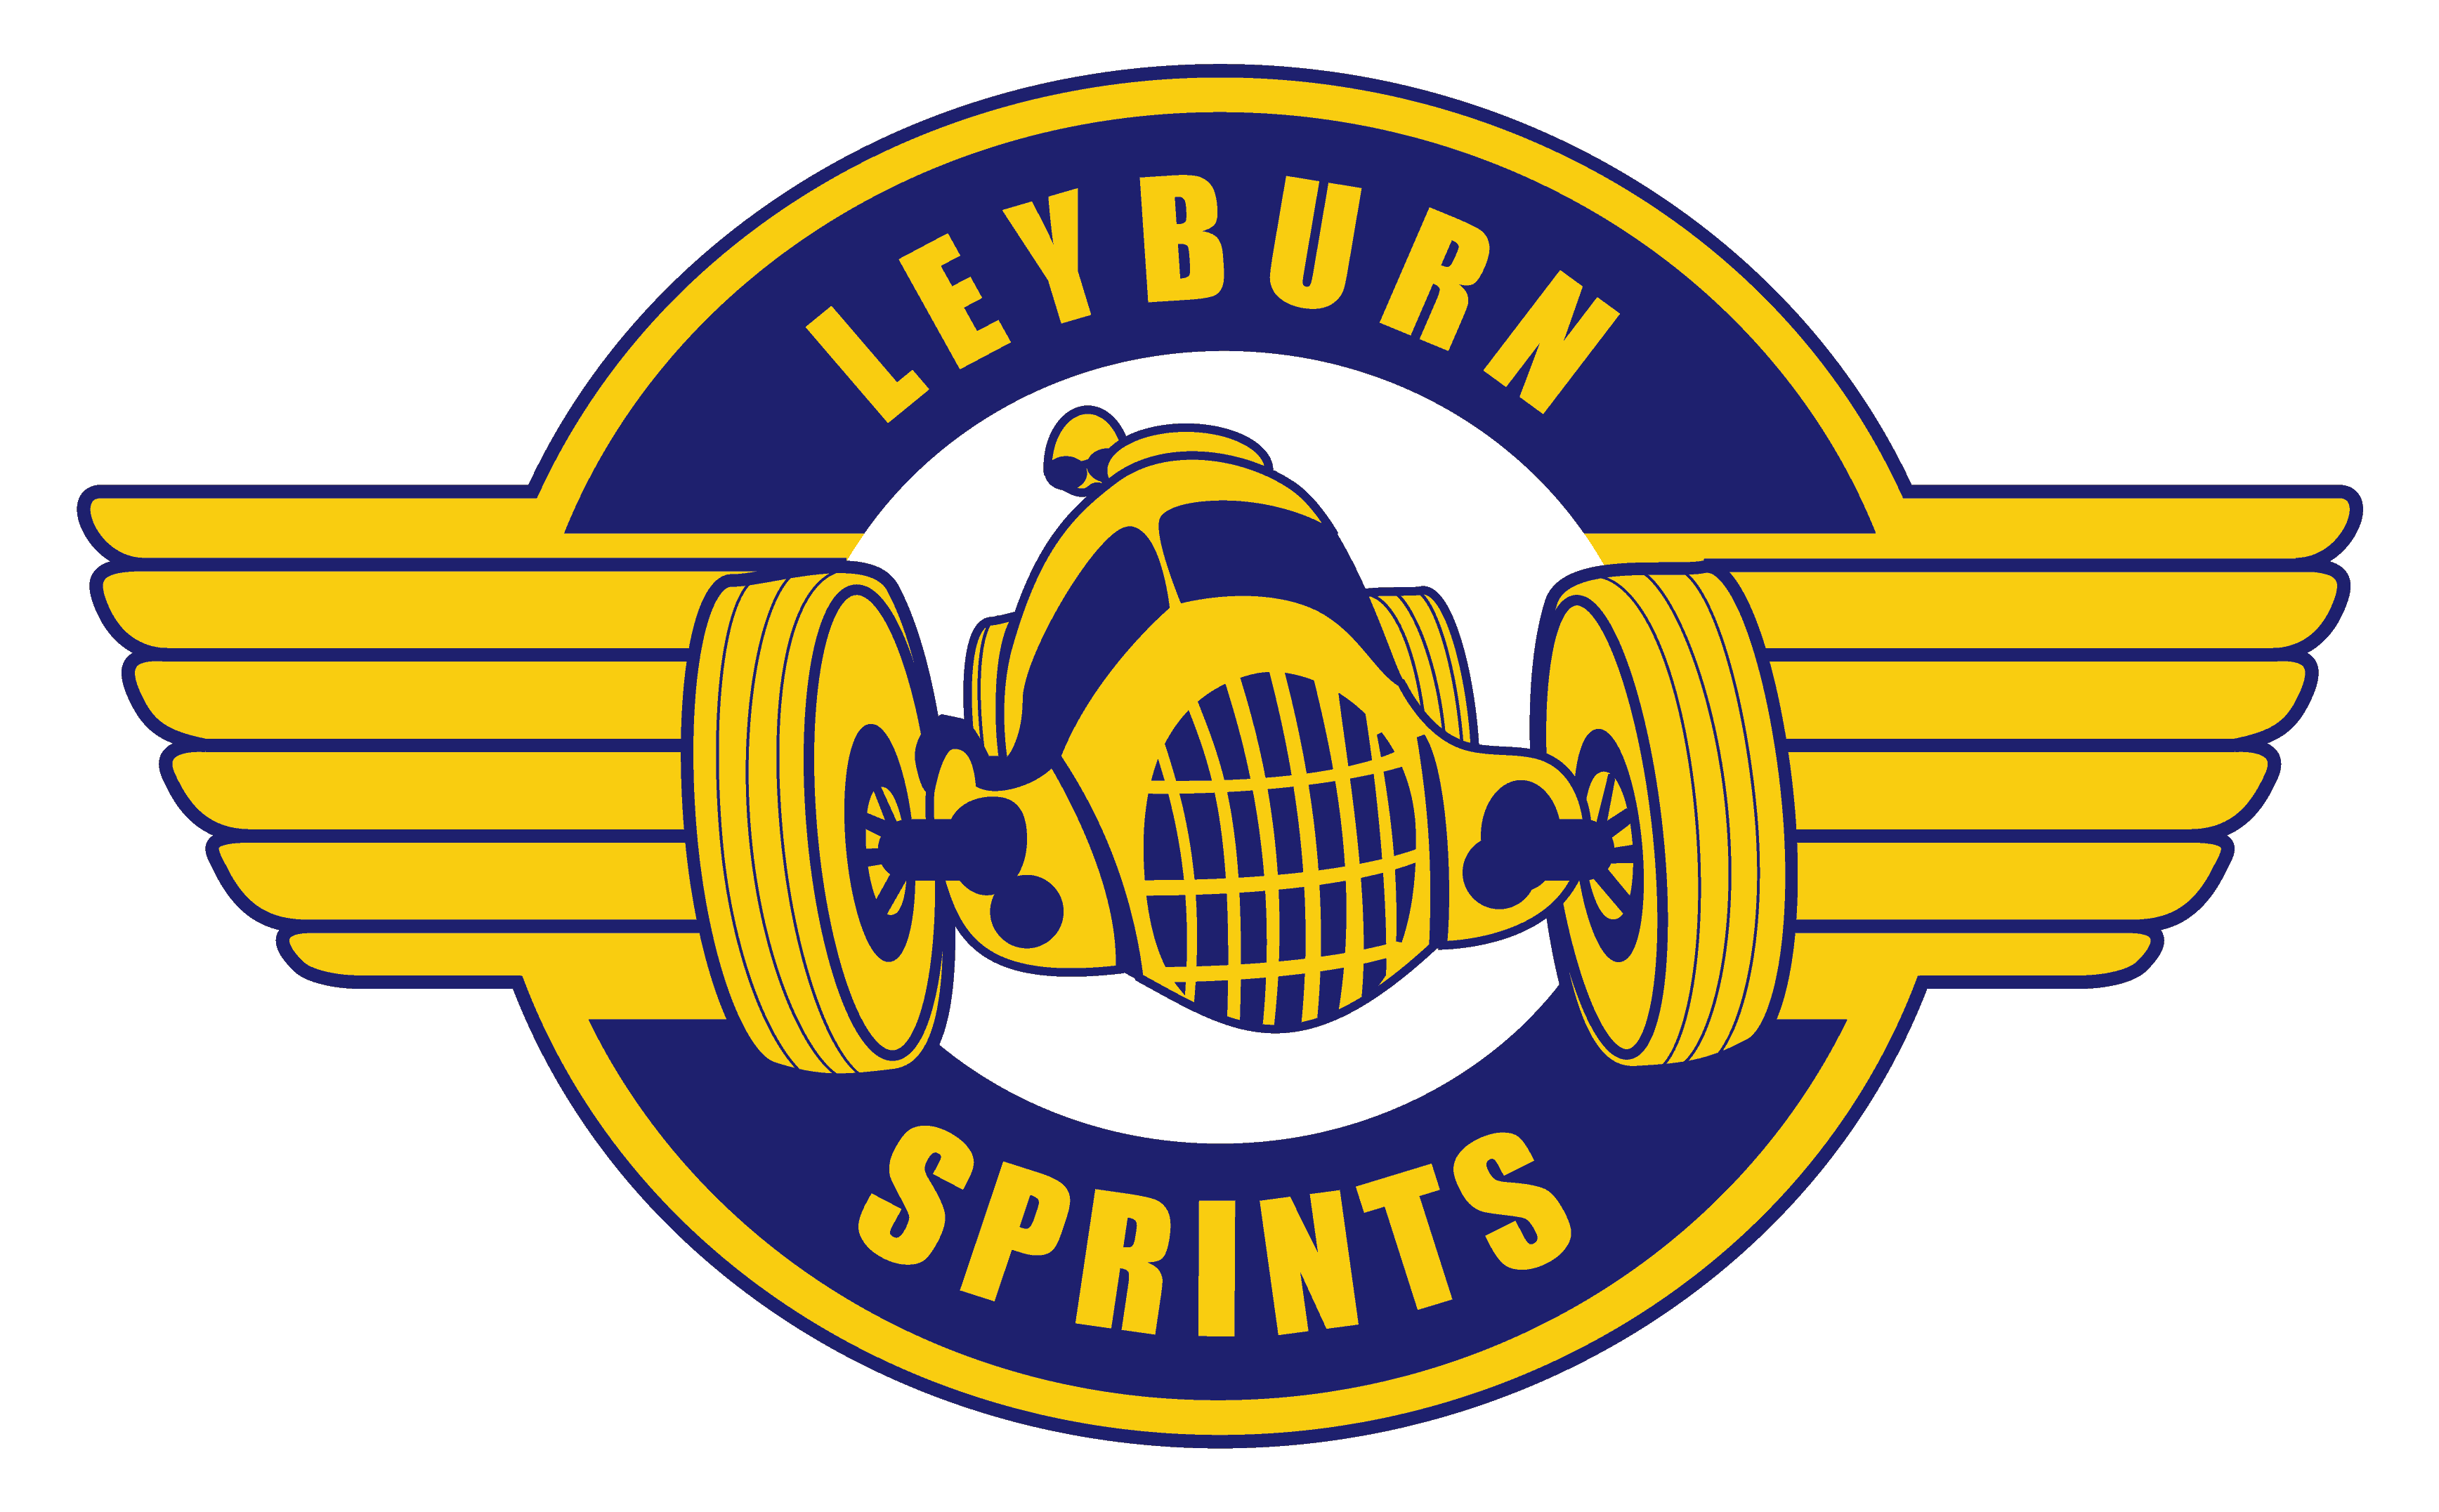 Leyburn Sprints logo